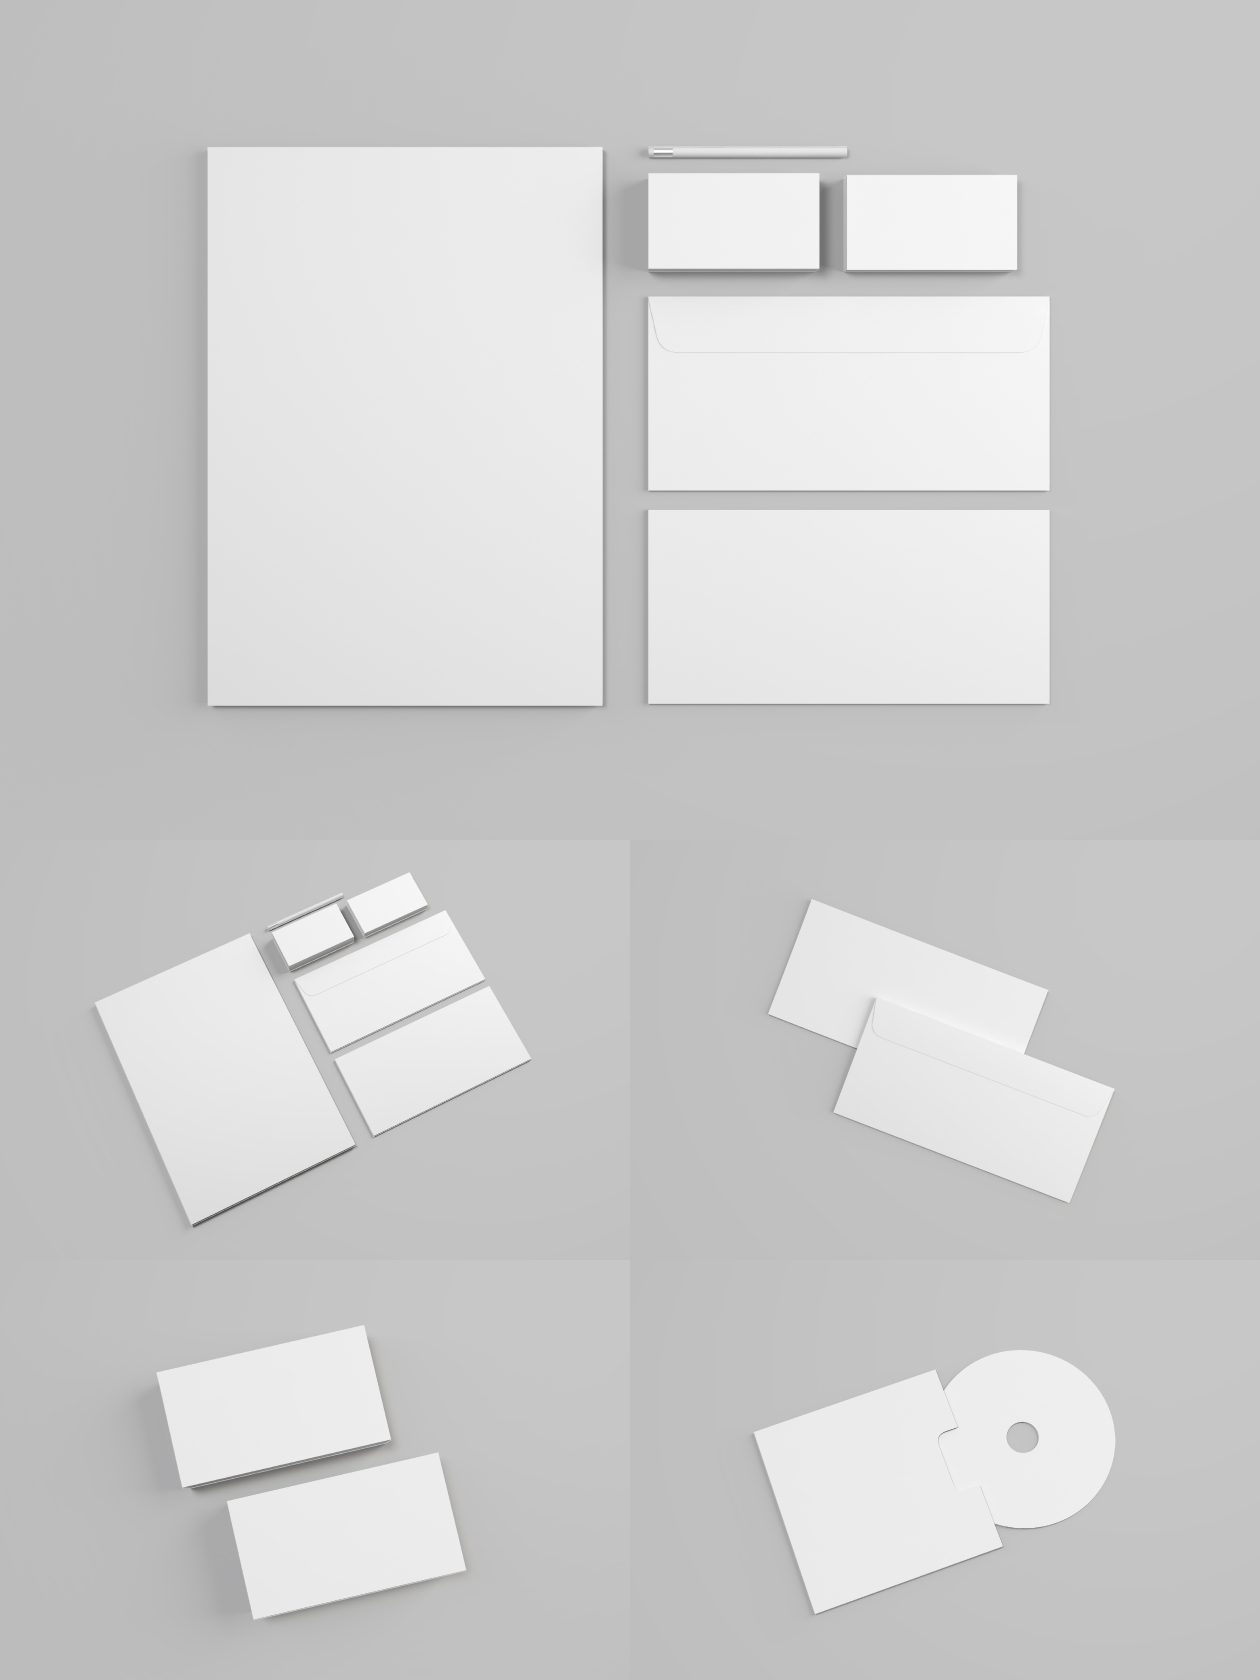 品牌VI设计效果预览办公用品样机模板 Professional Stationery Mockup插图(5)